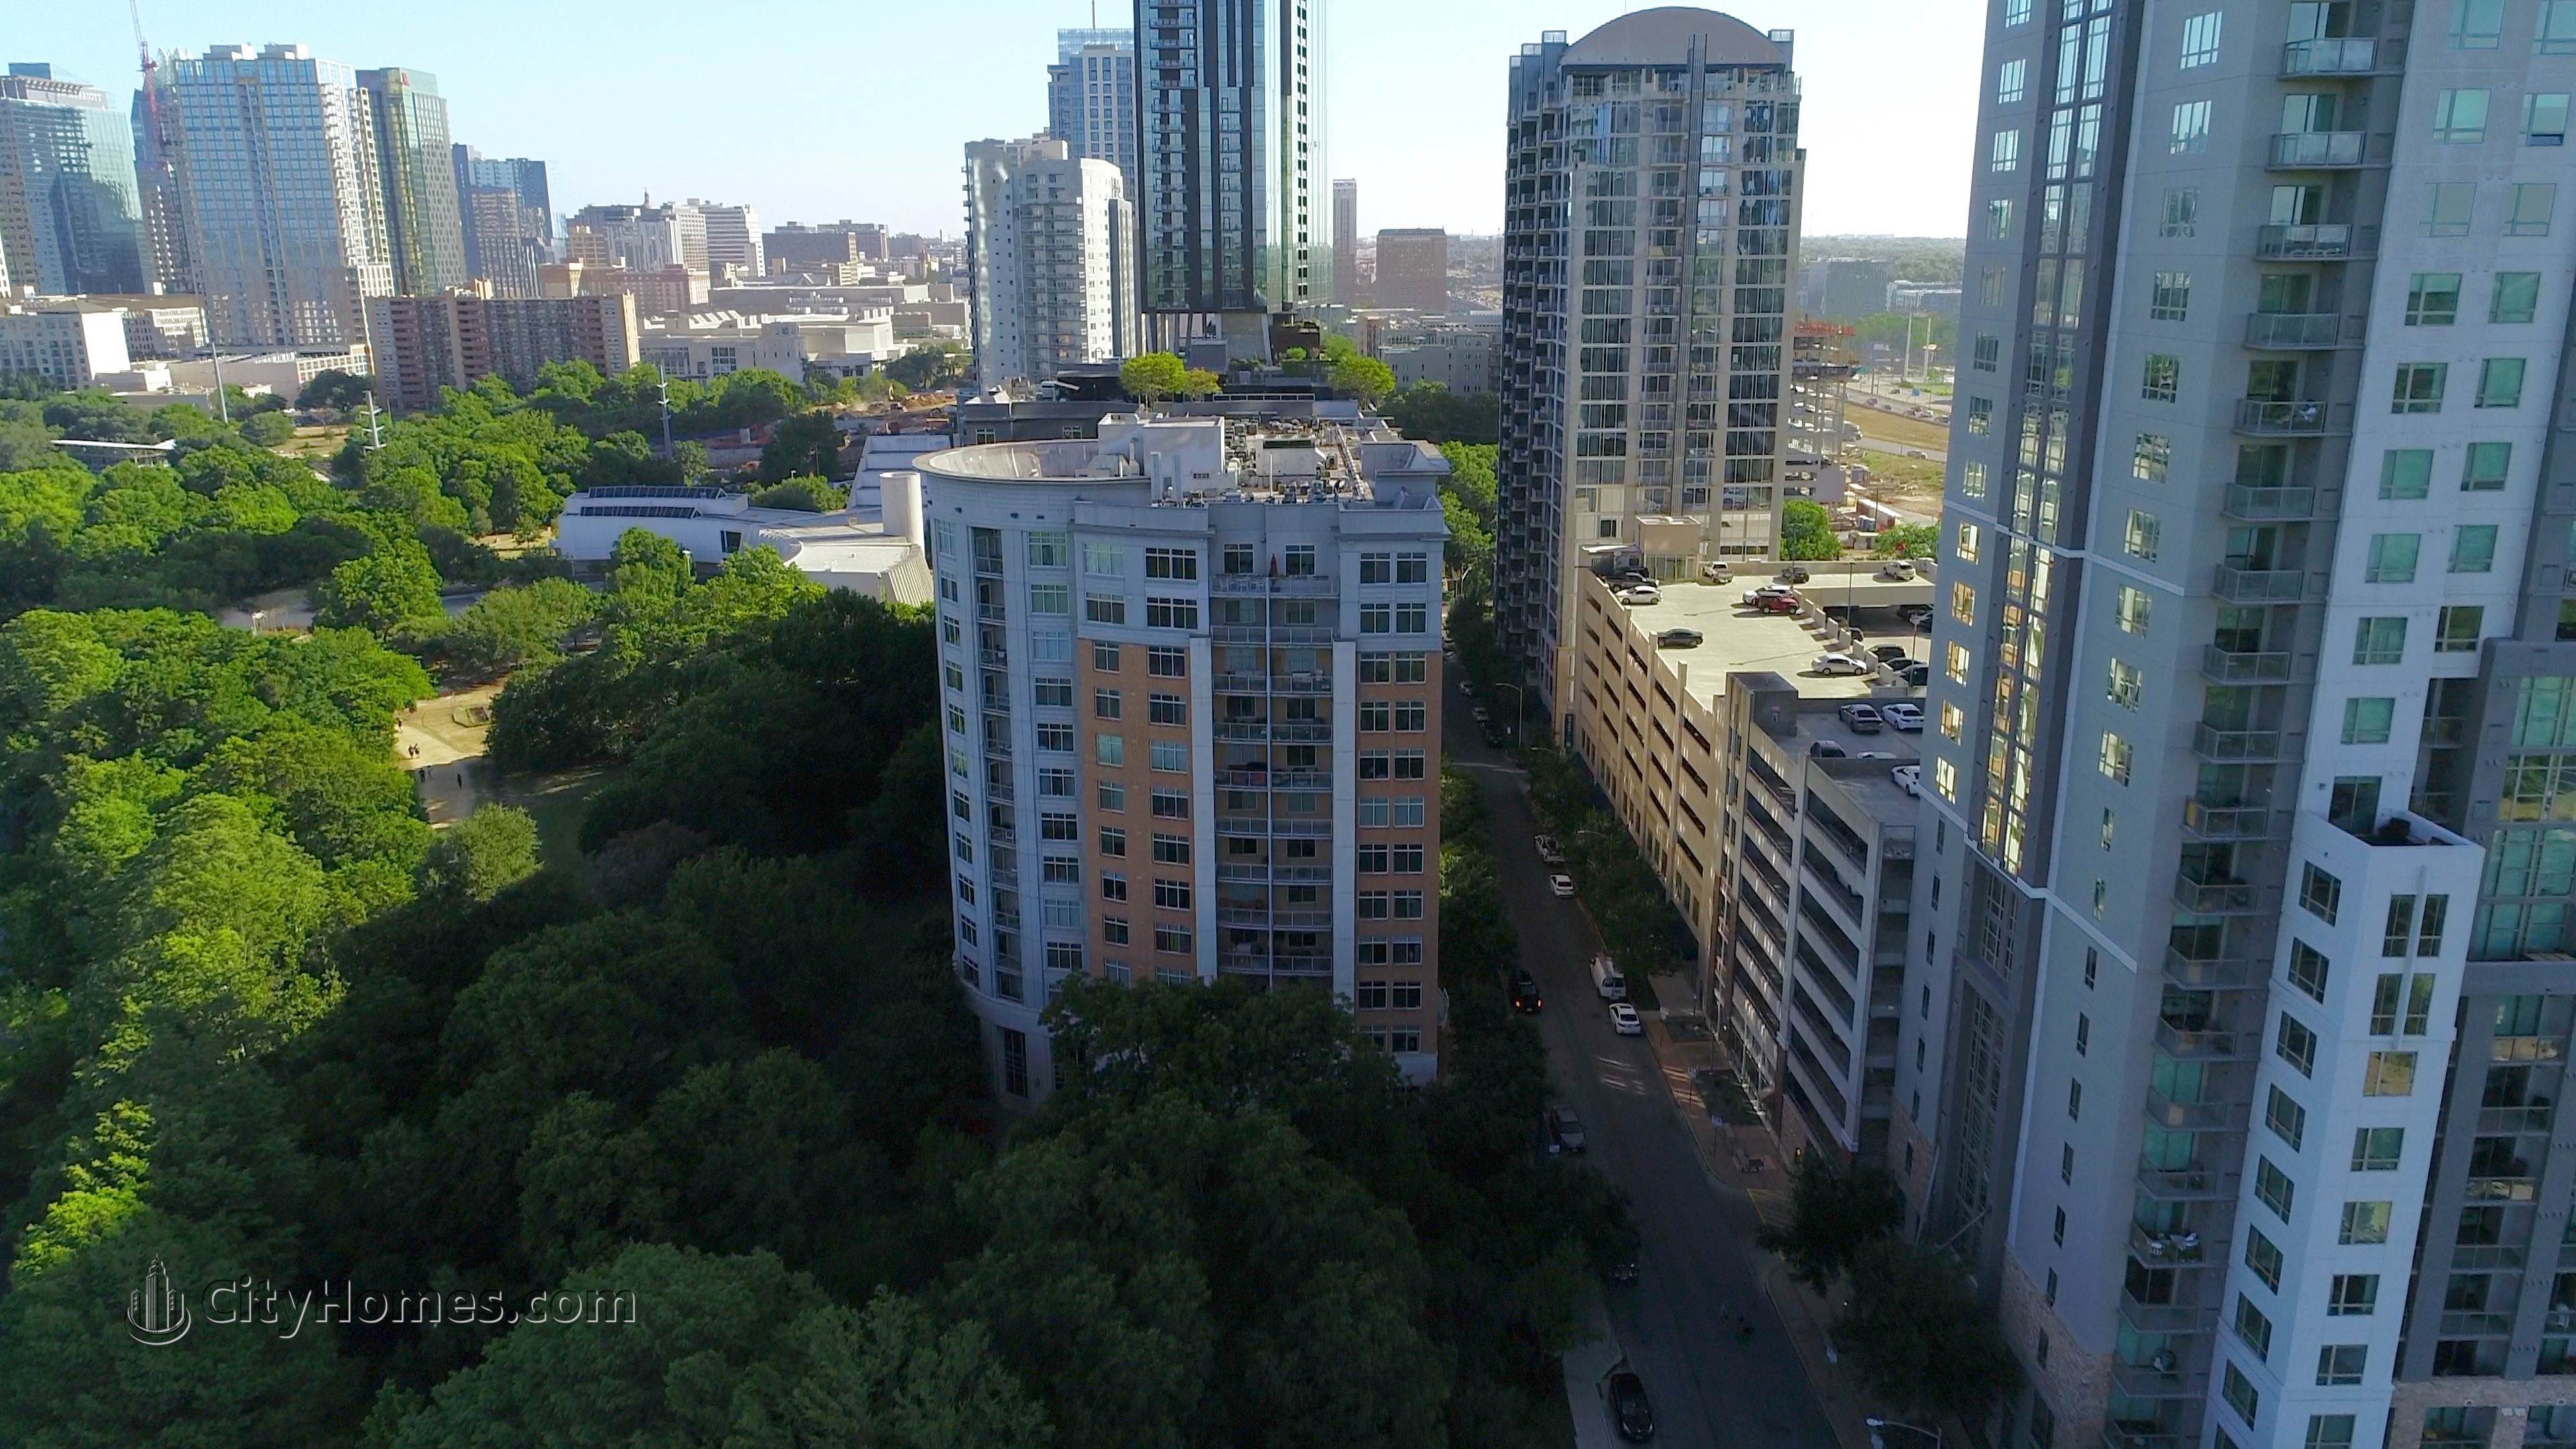 2. 54 Rainey St, Downtown Austin, Austin, TX 78701에 Milago Condominiums 건물